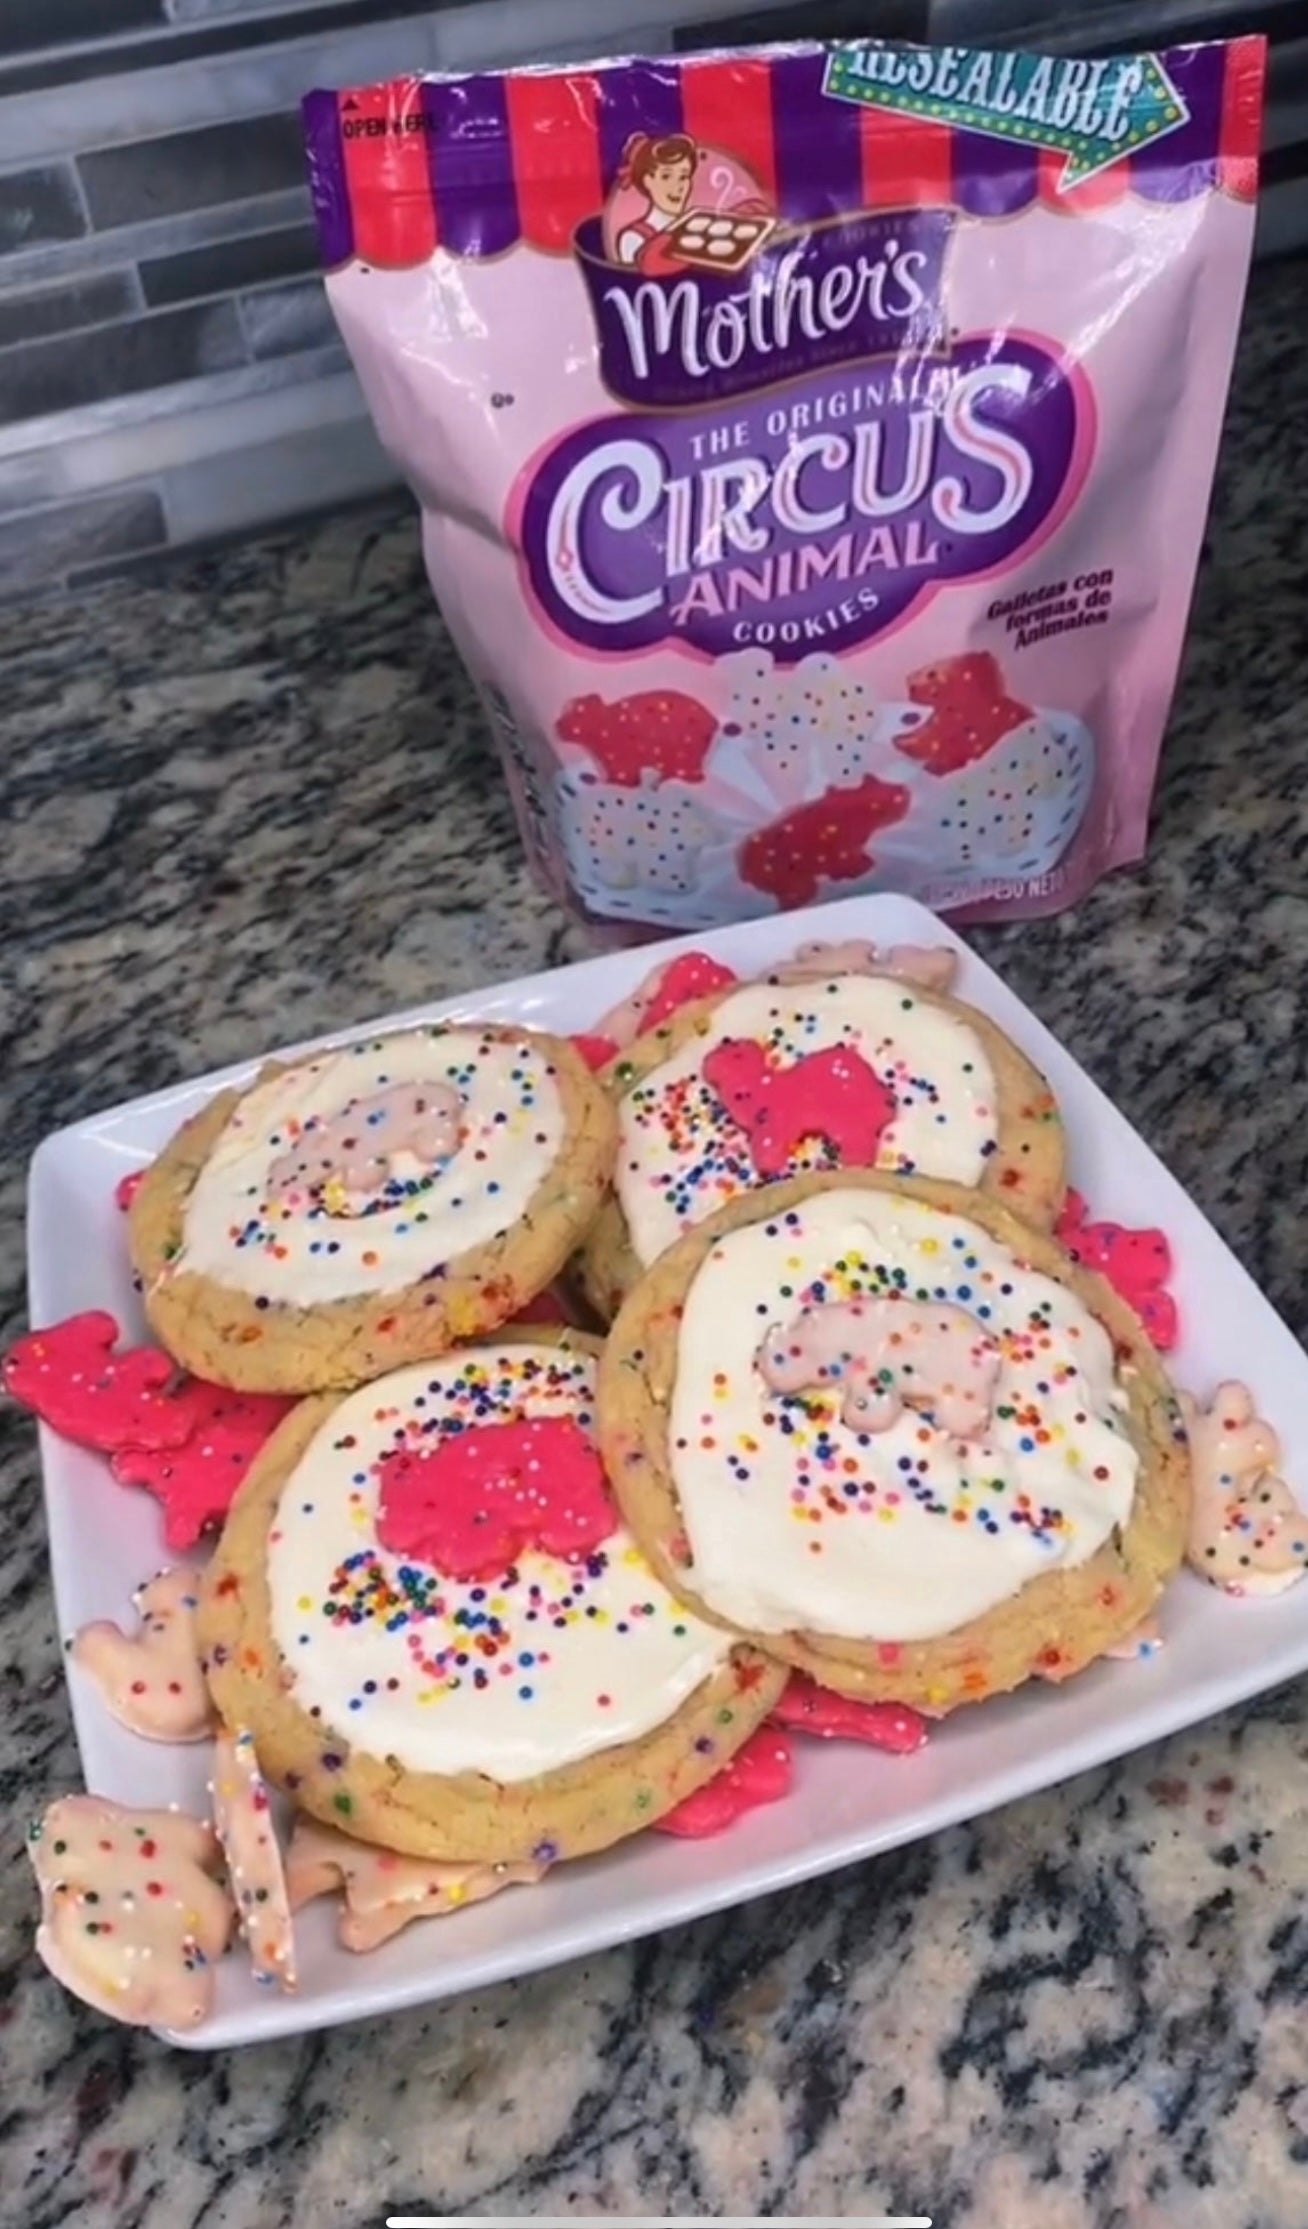 Circus animal cookies